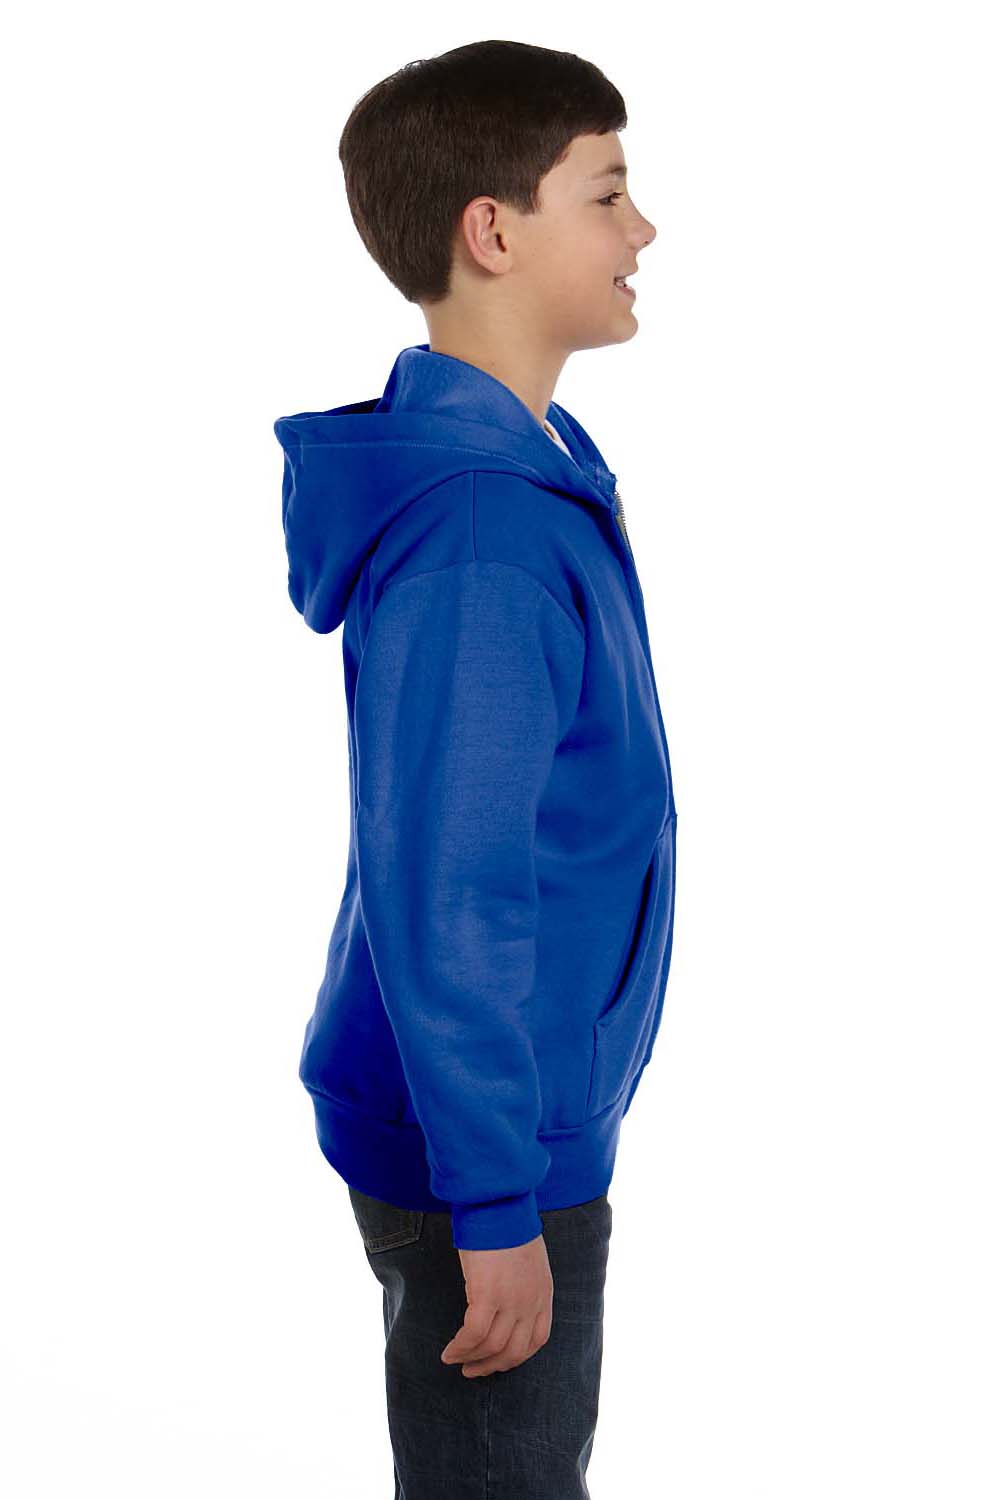 Hanes P480 Youth EcoSmart Print Pro XP Full Zip Hooded Sweatshirt Hoodie Royal Blue Side